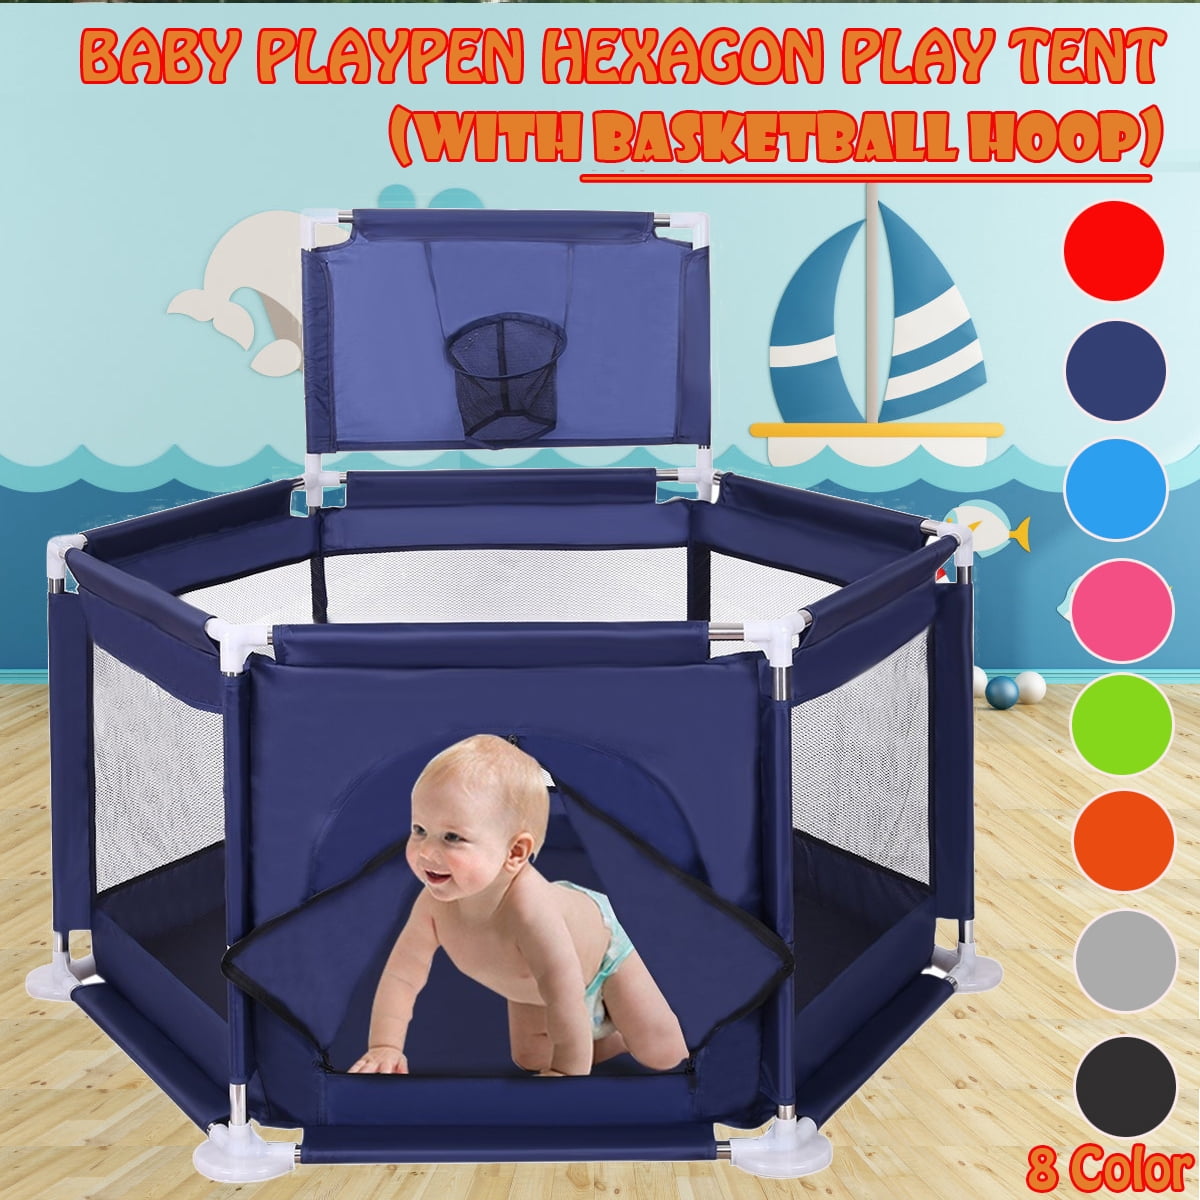 baby portable activity center